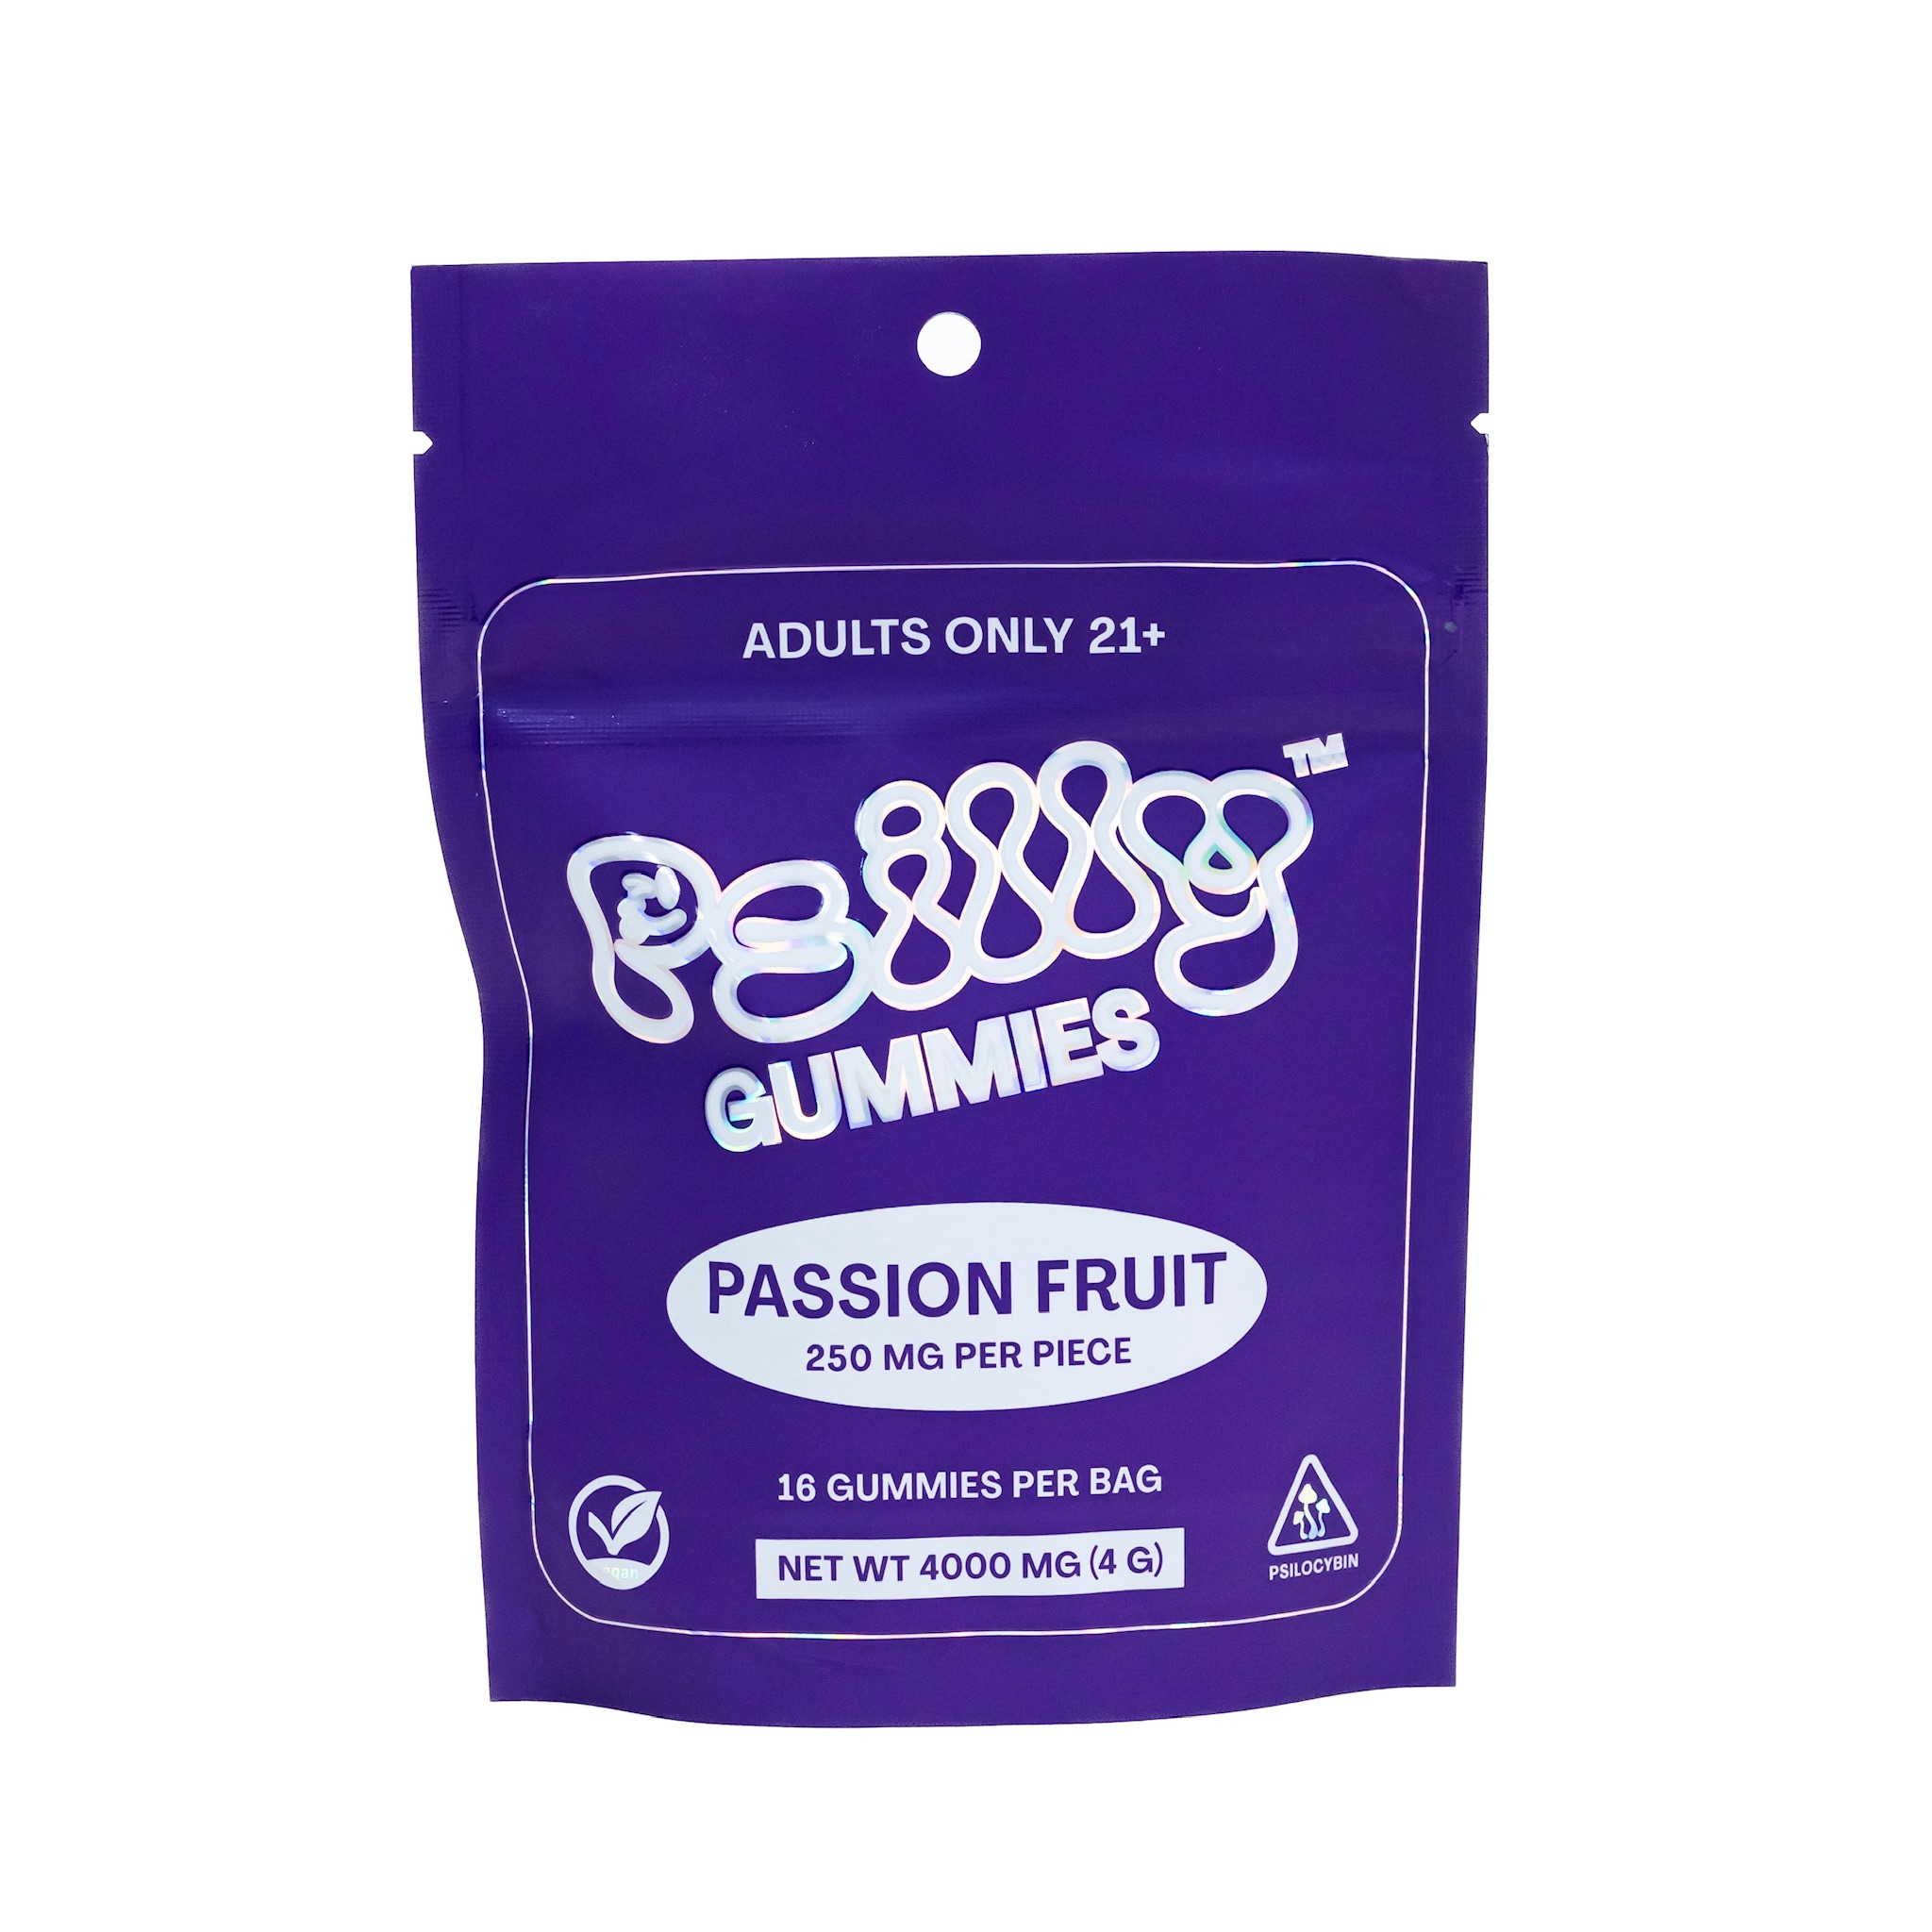 Psilly Mushroom Gummies Bag 4g Passion Fruit